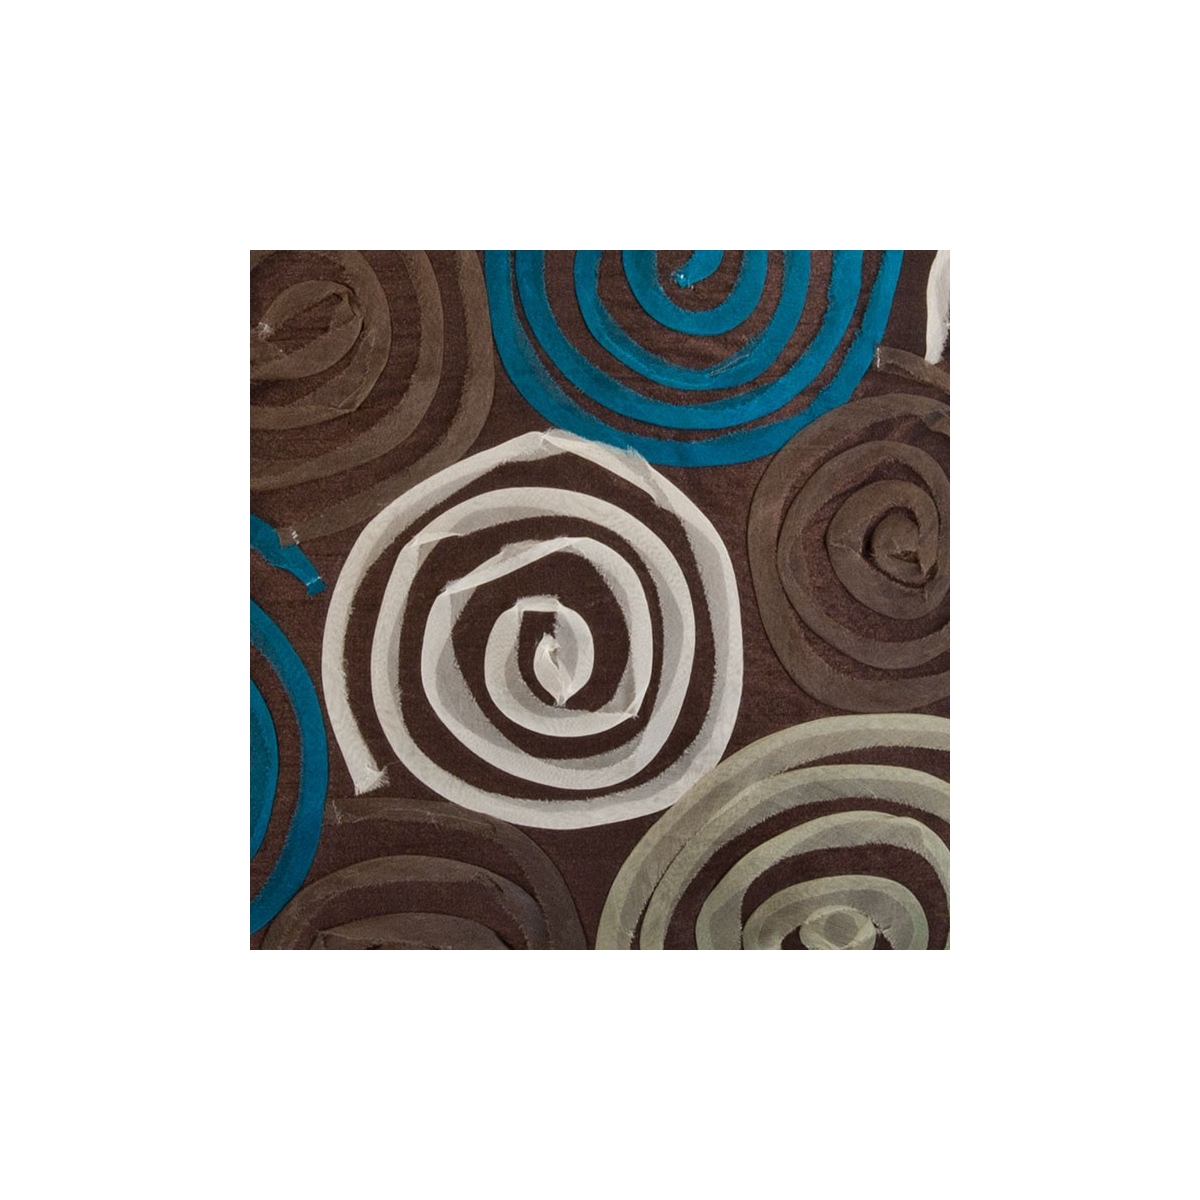 Fodera cuscino in cotone color Cioccolato con righe a contrasto color ecrù.